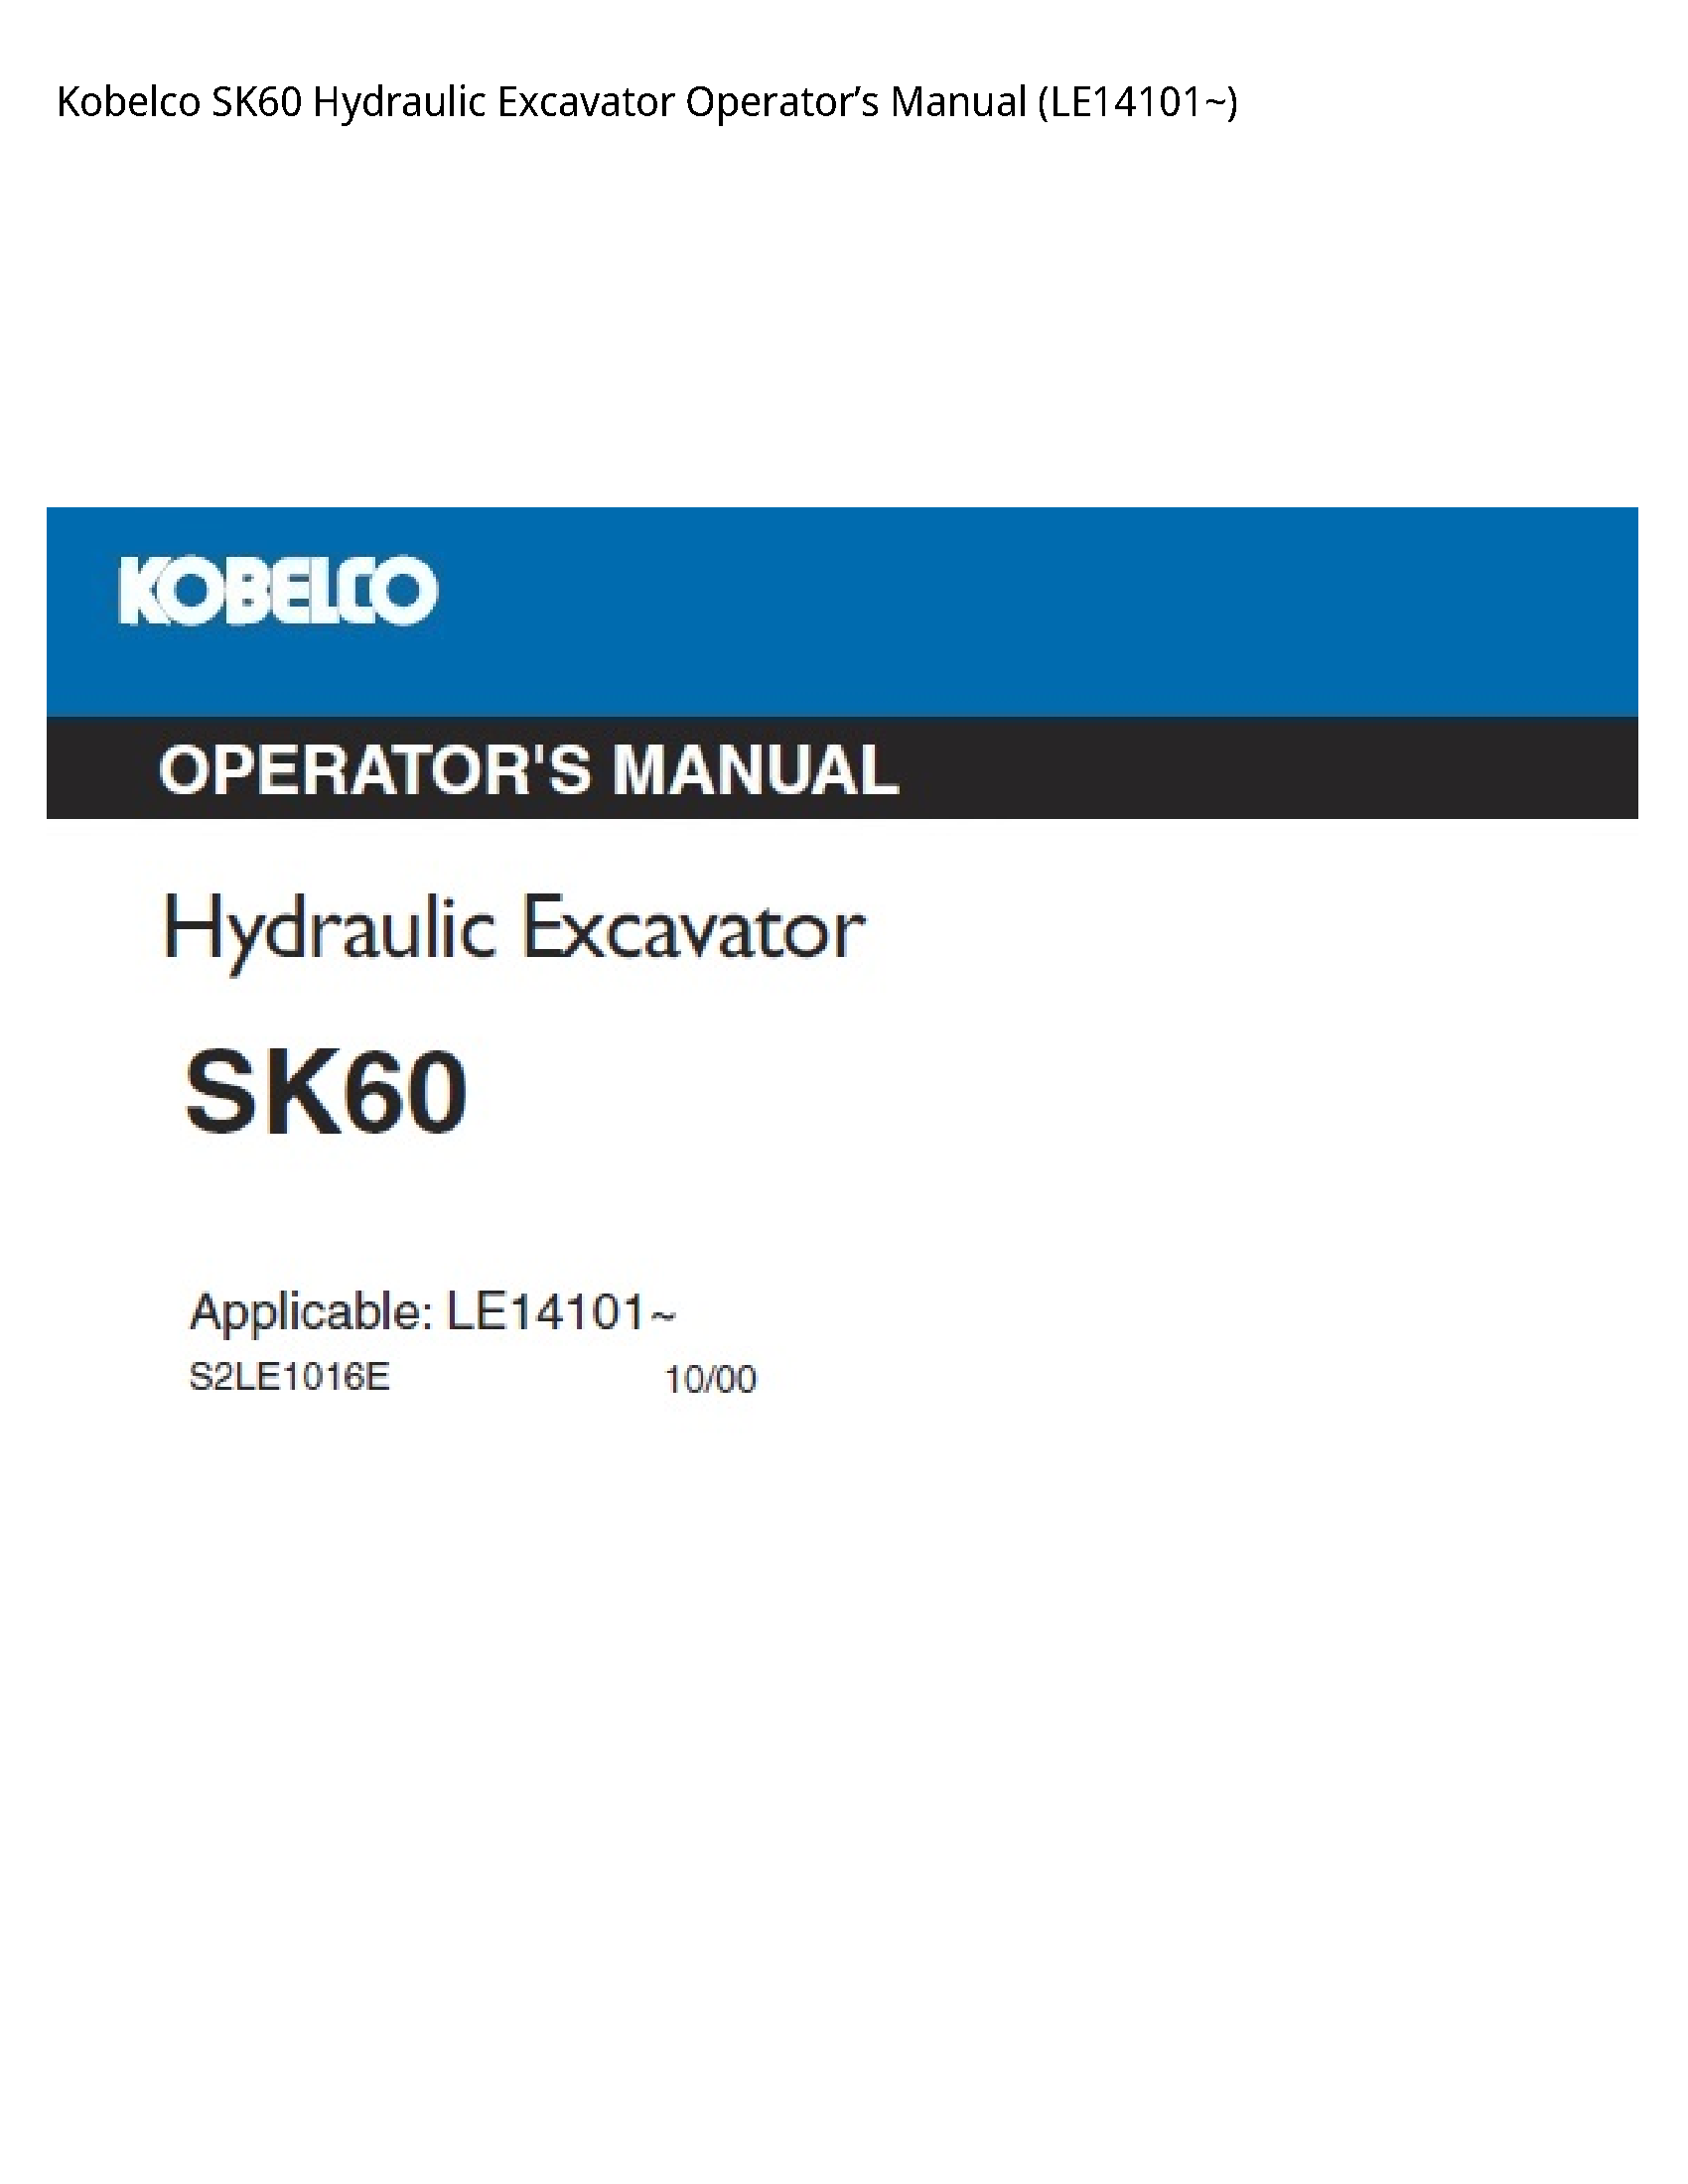 Kobelco SK60 Hydraulic Excavator Operator’s manual